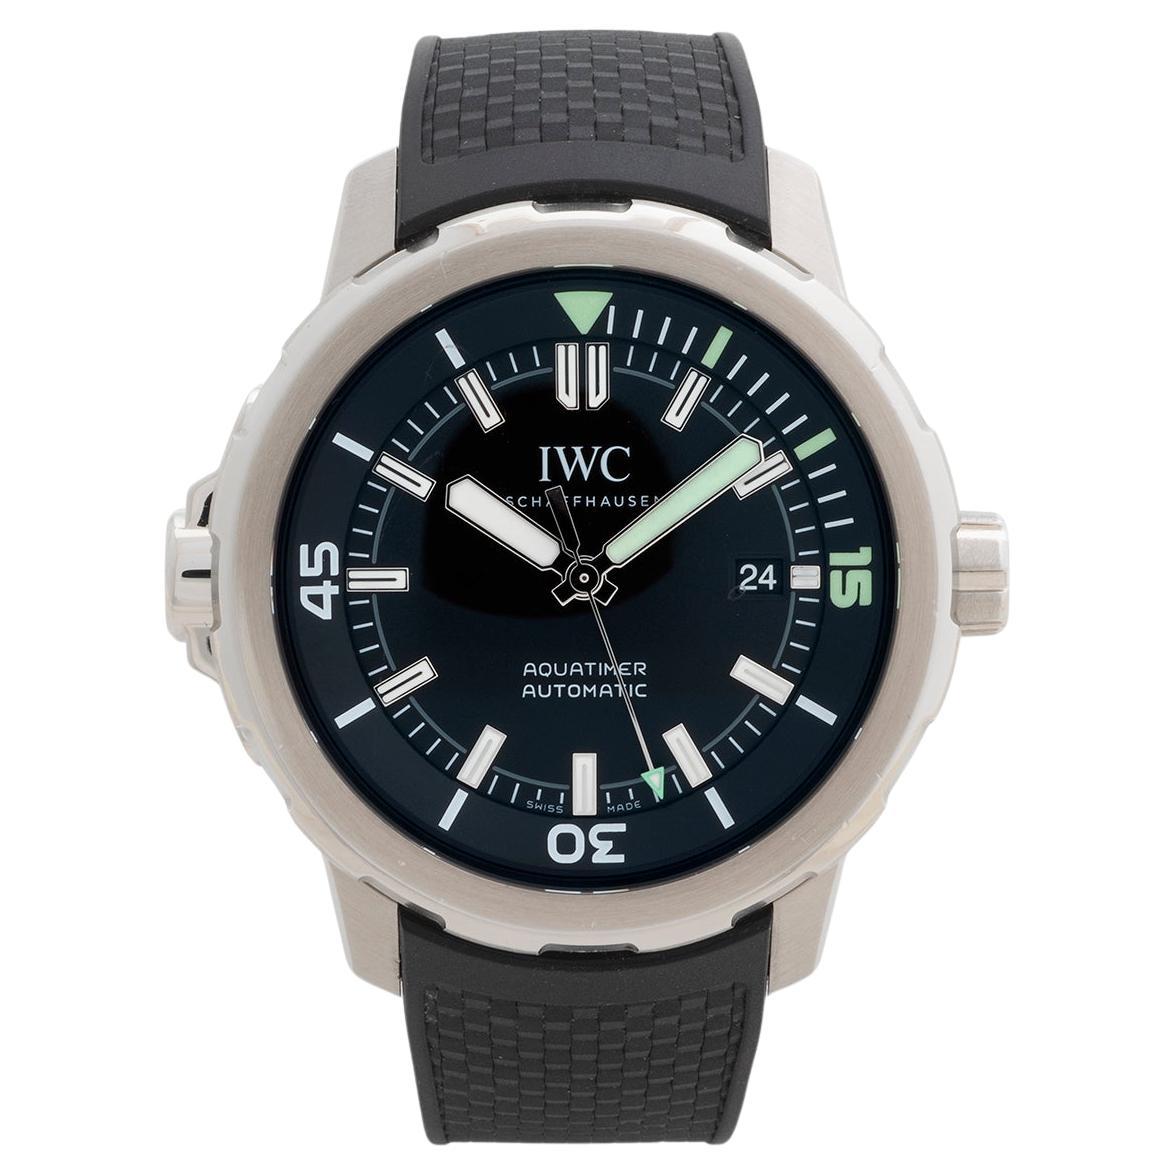 IWC Aquatimer Wristwatch. Automatic, 42mm Case, Rubber Strap. Year 2019